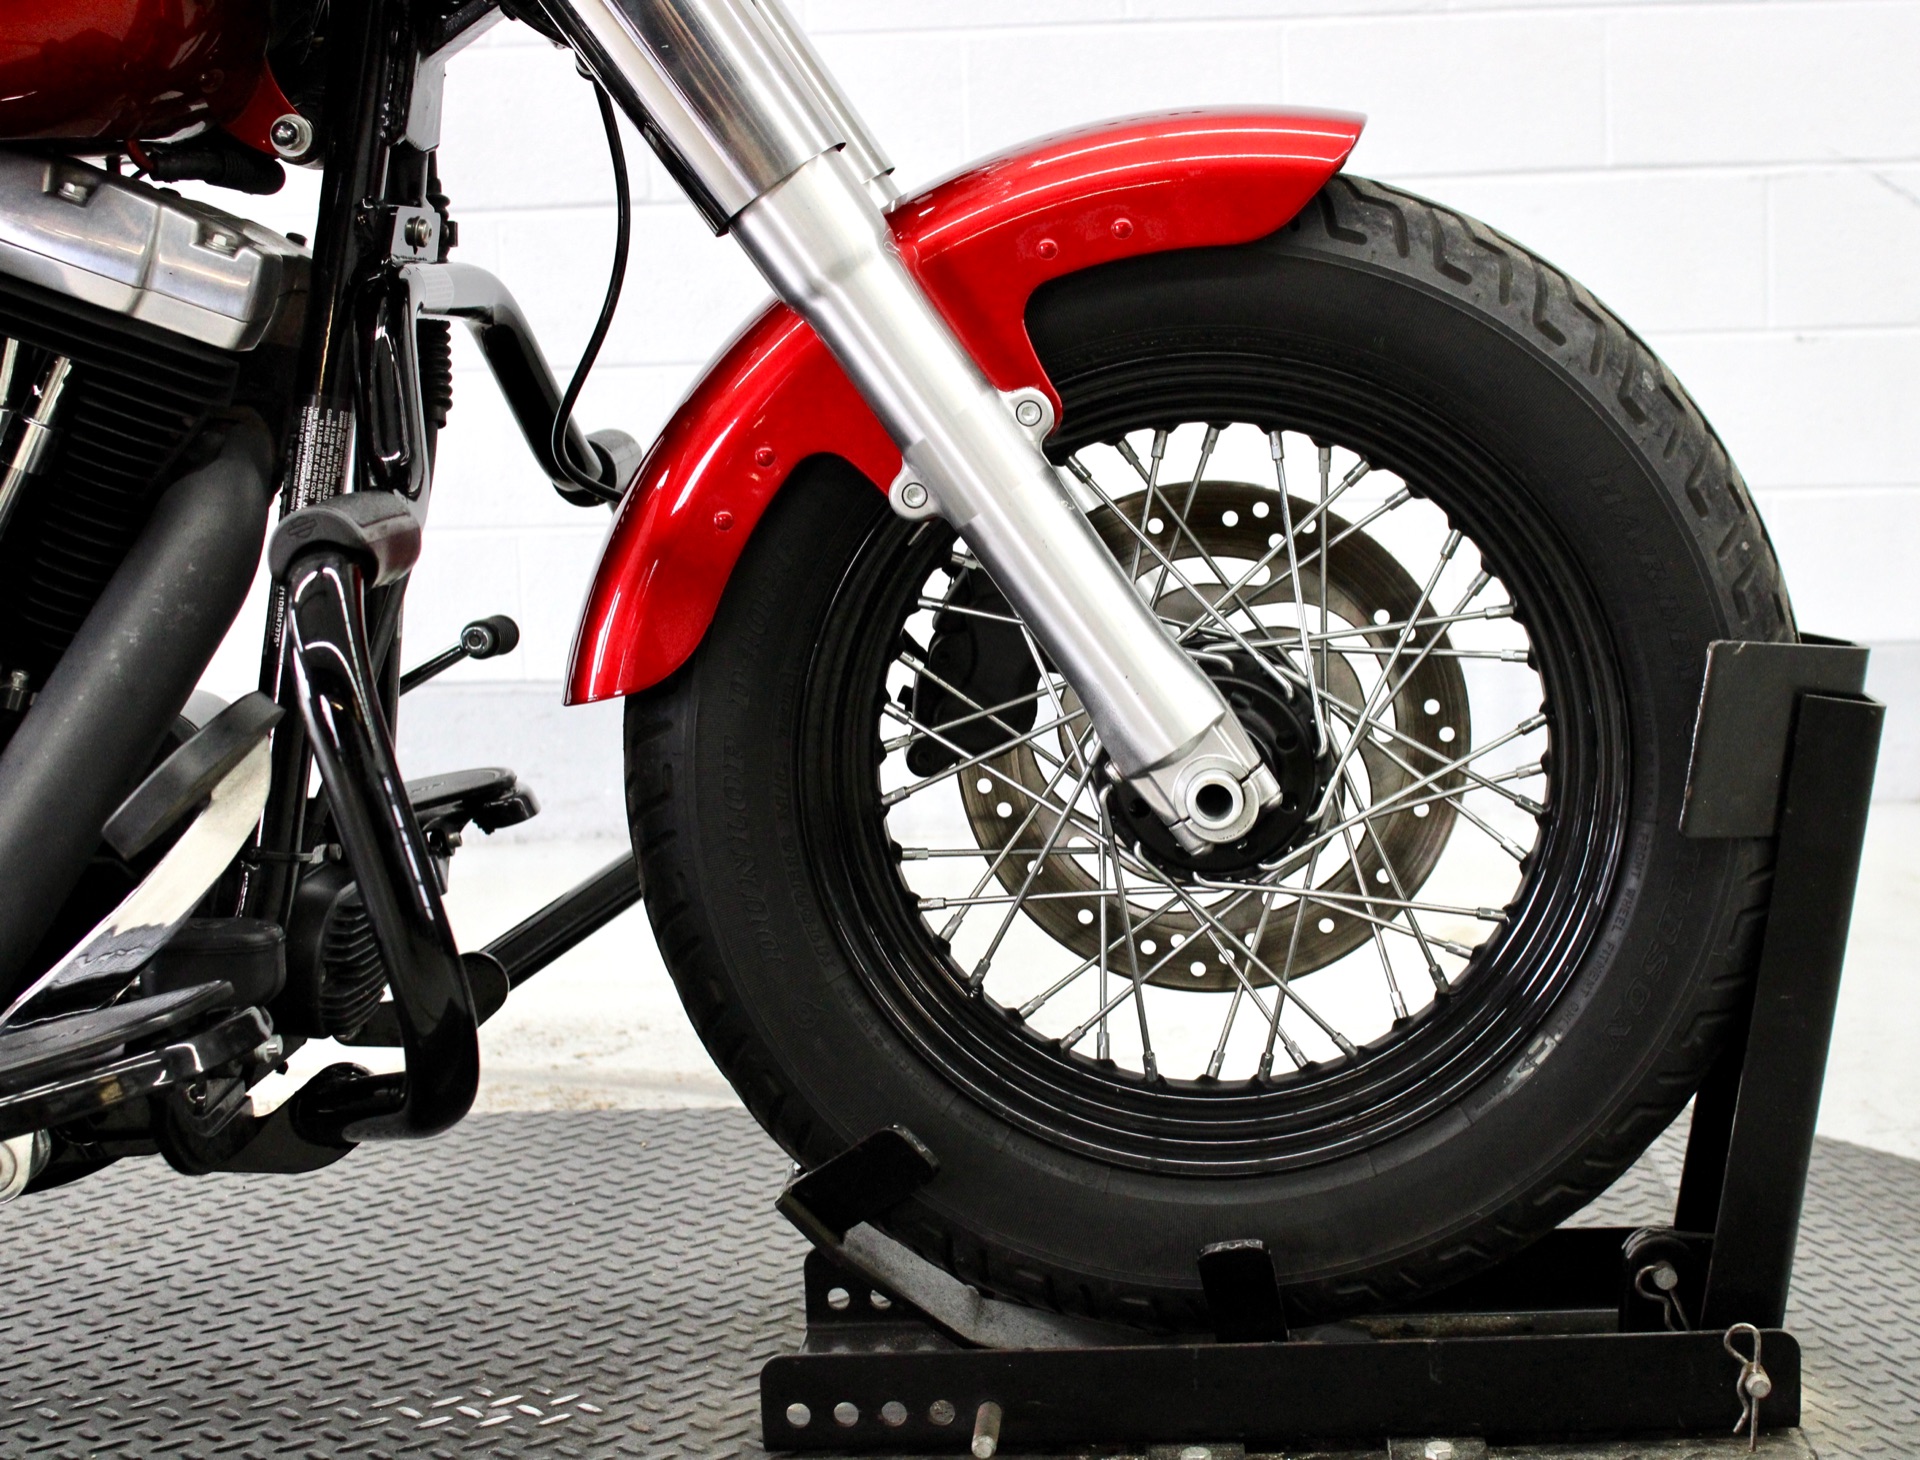 2013 Harley-Davidson Softail Slim® in Fredericksburg, Virginia - Photo 11